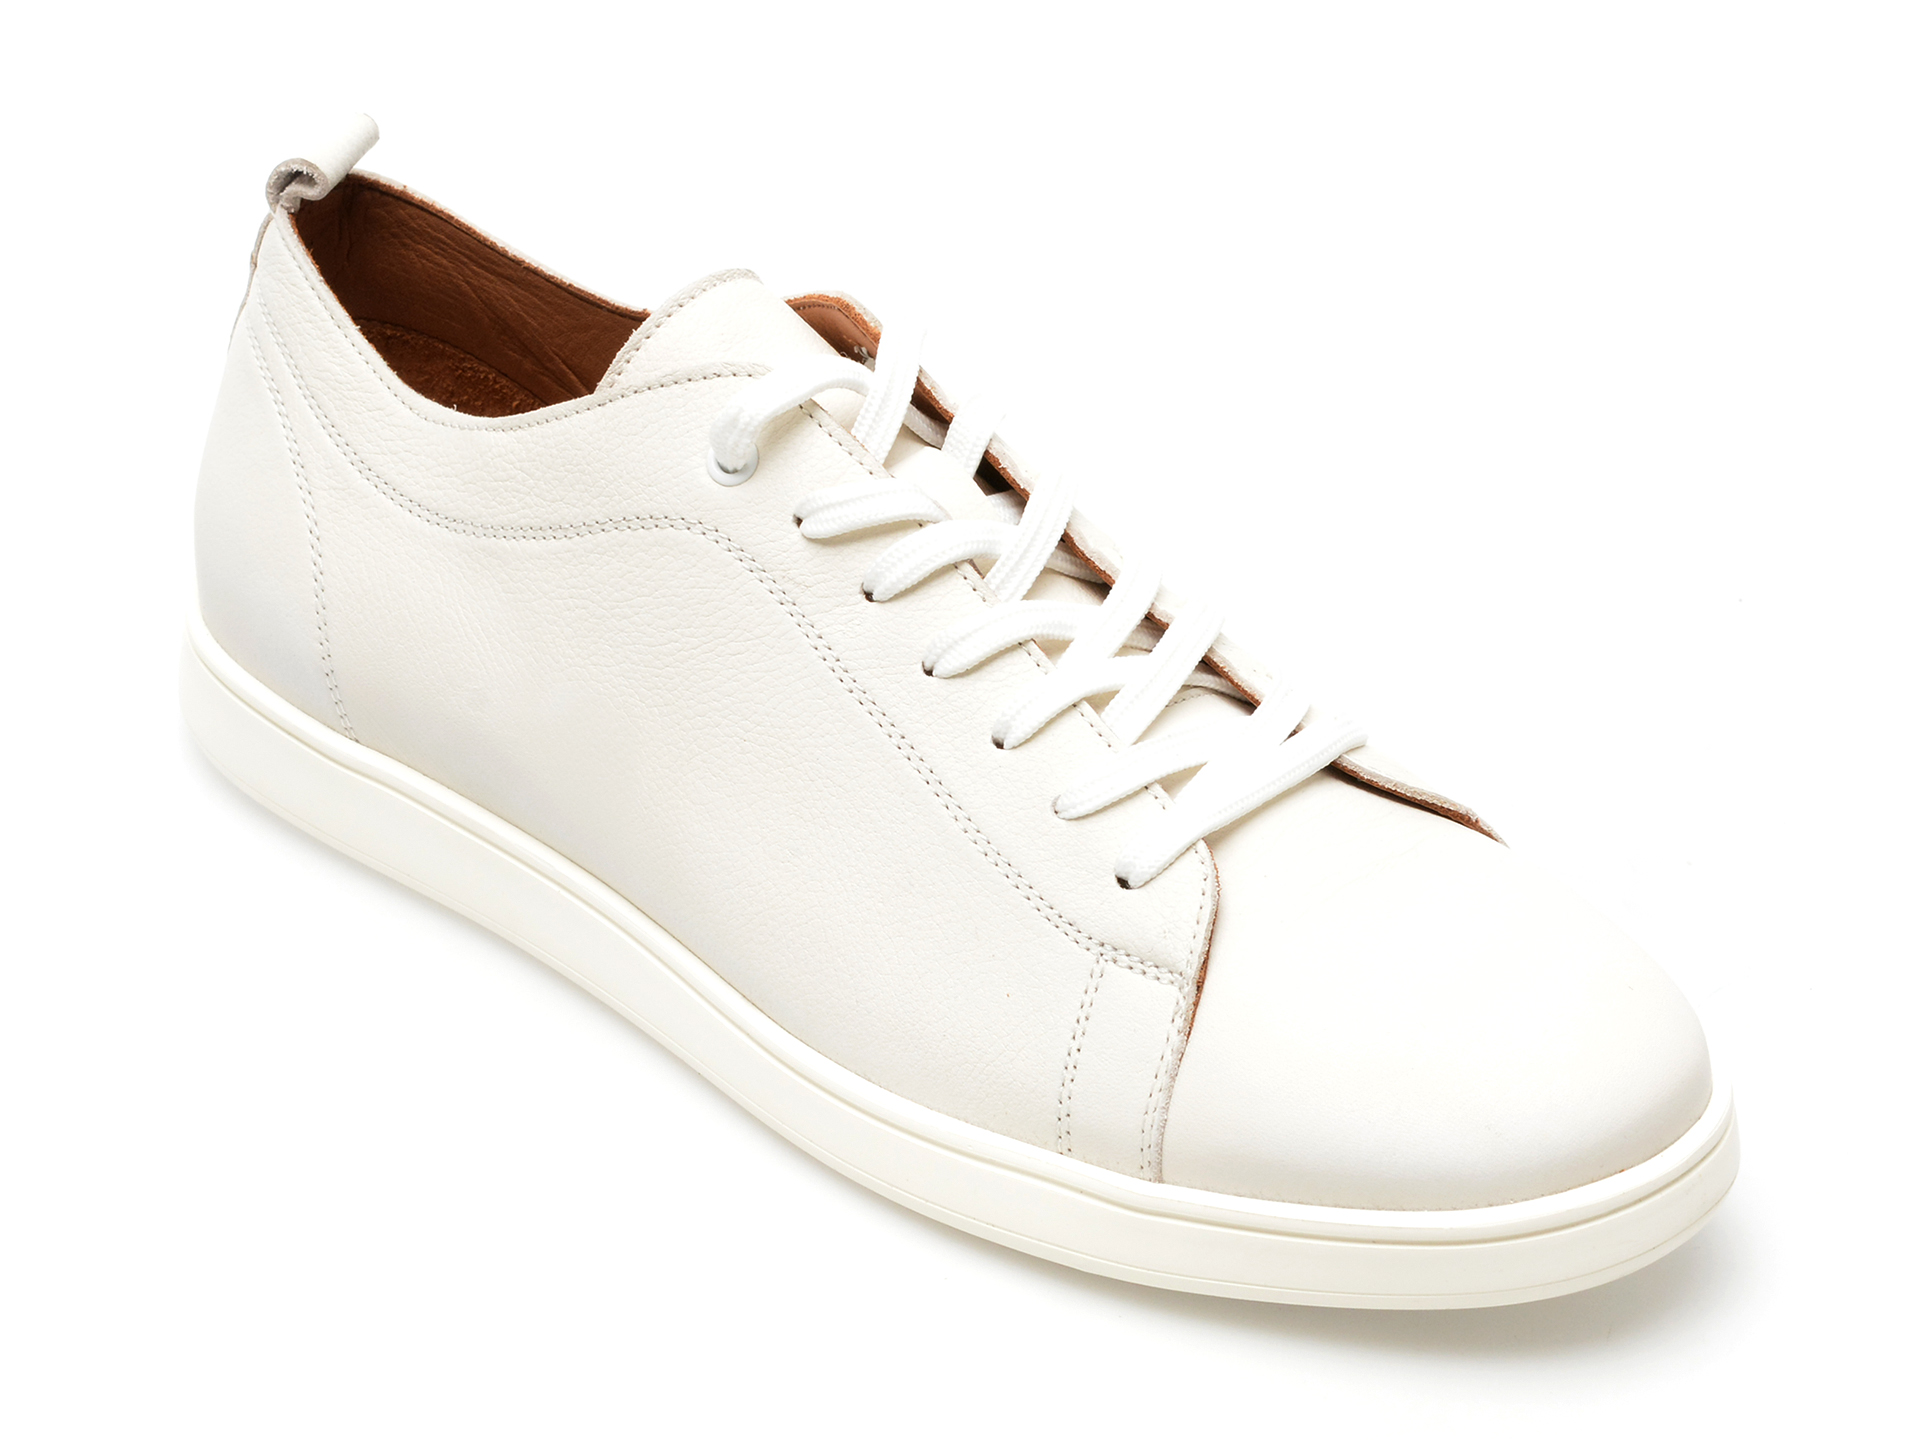 Pantofi EPICA albi, 3460, din piele naturala /barbati/pantofi